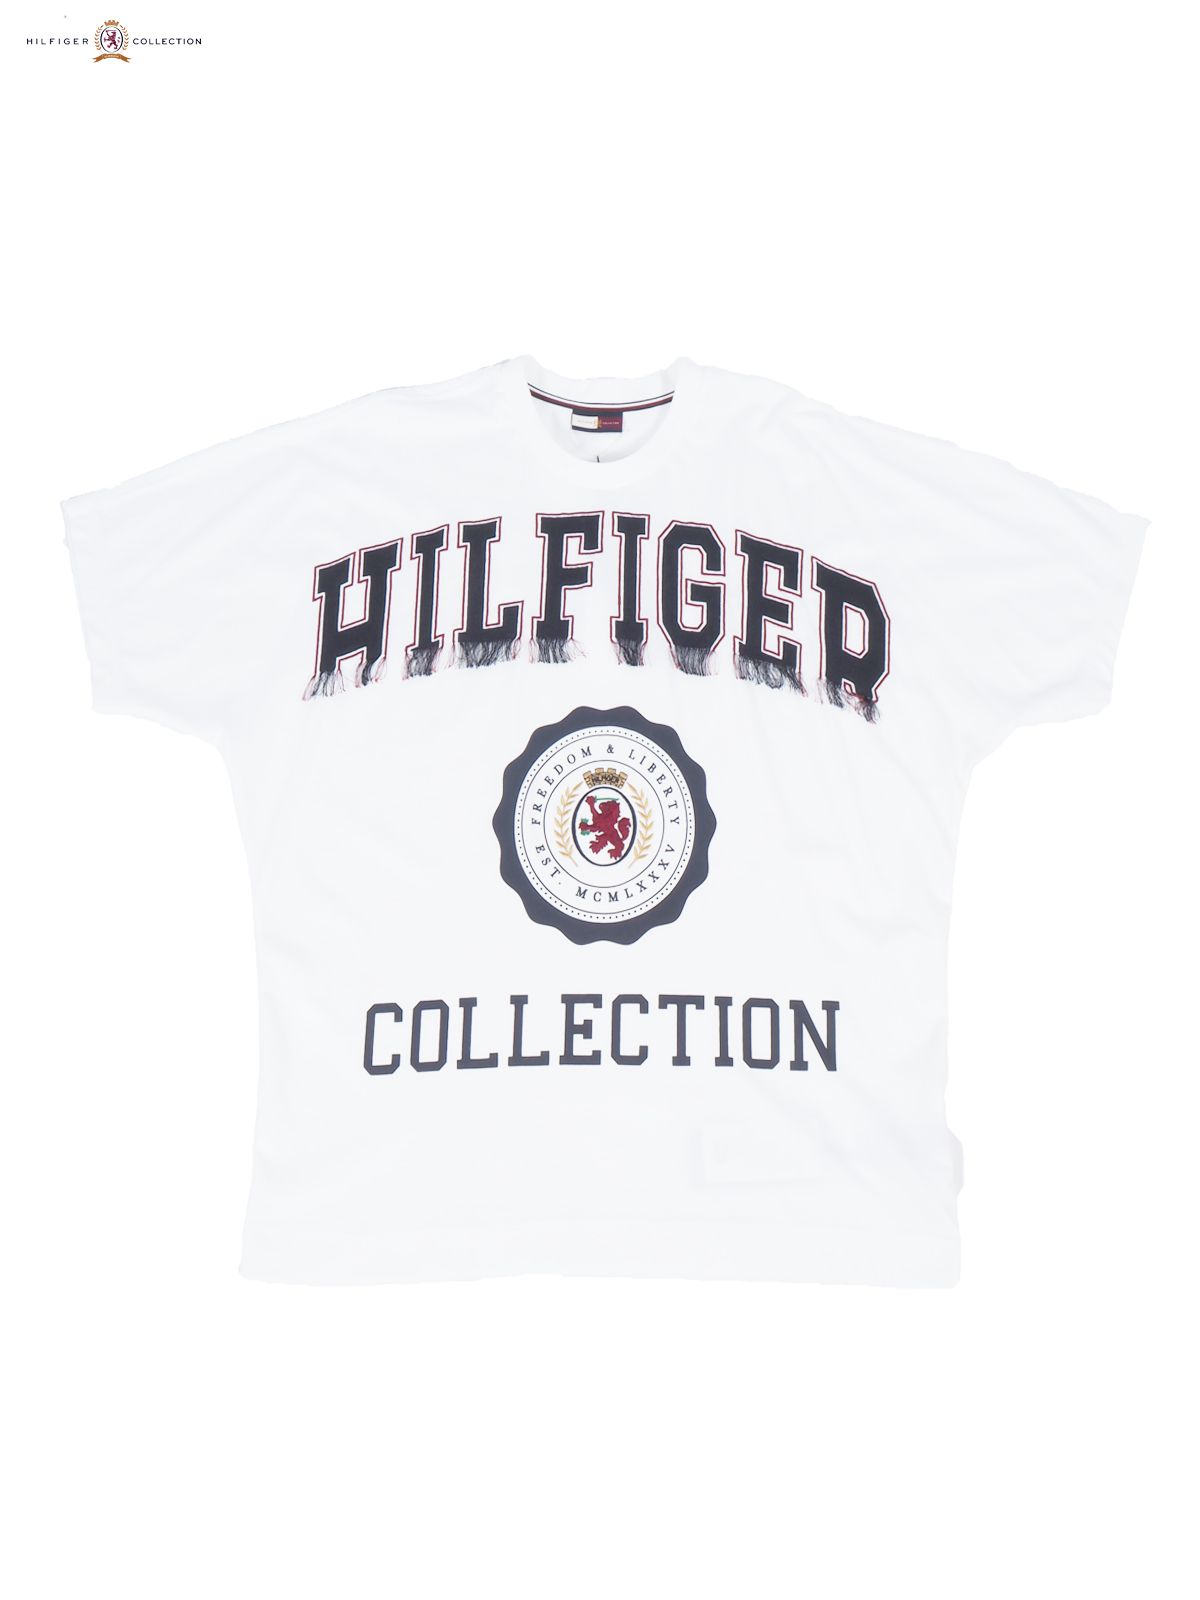 HILFIGER COLLECTION - ヒルフィガー コレクション | Confidence